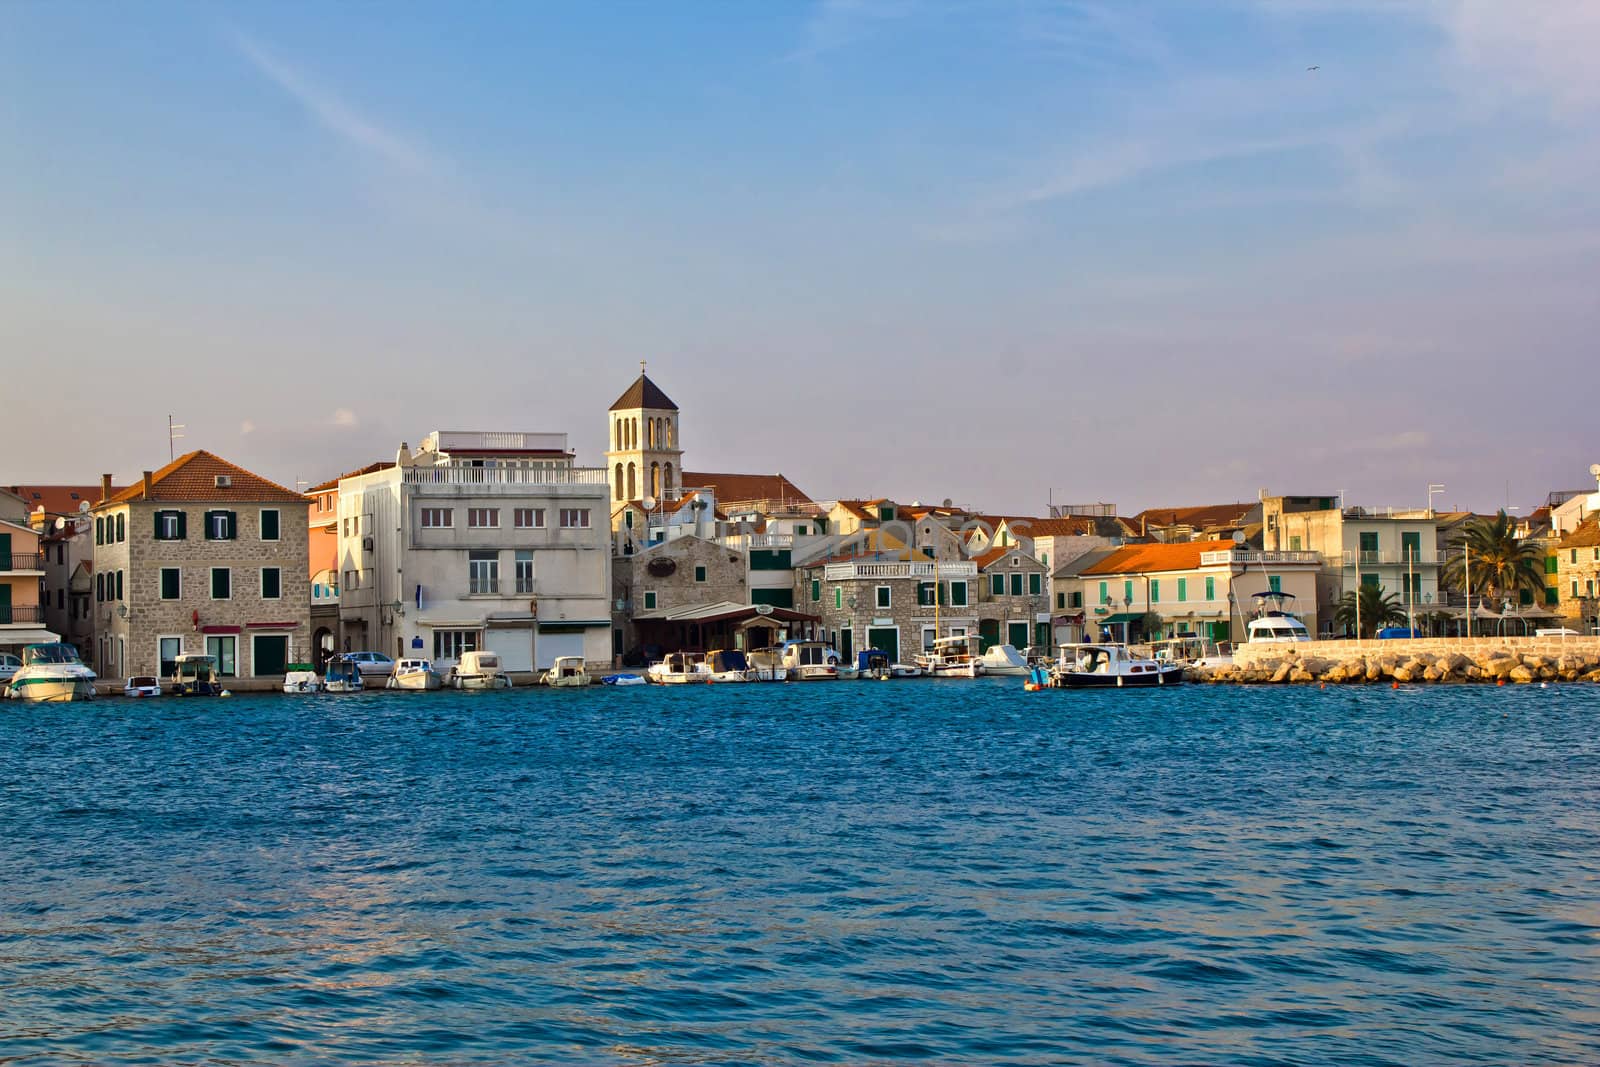 Adriatic town of Vodice waterfront with mediterranean architecture, Dalmatia, Croatia